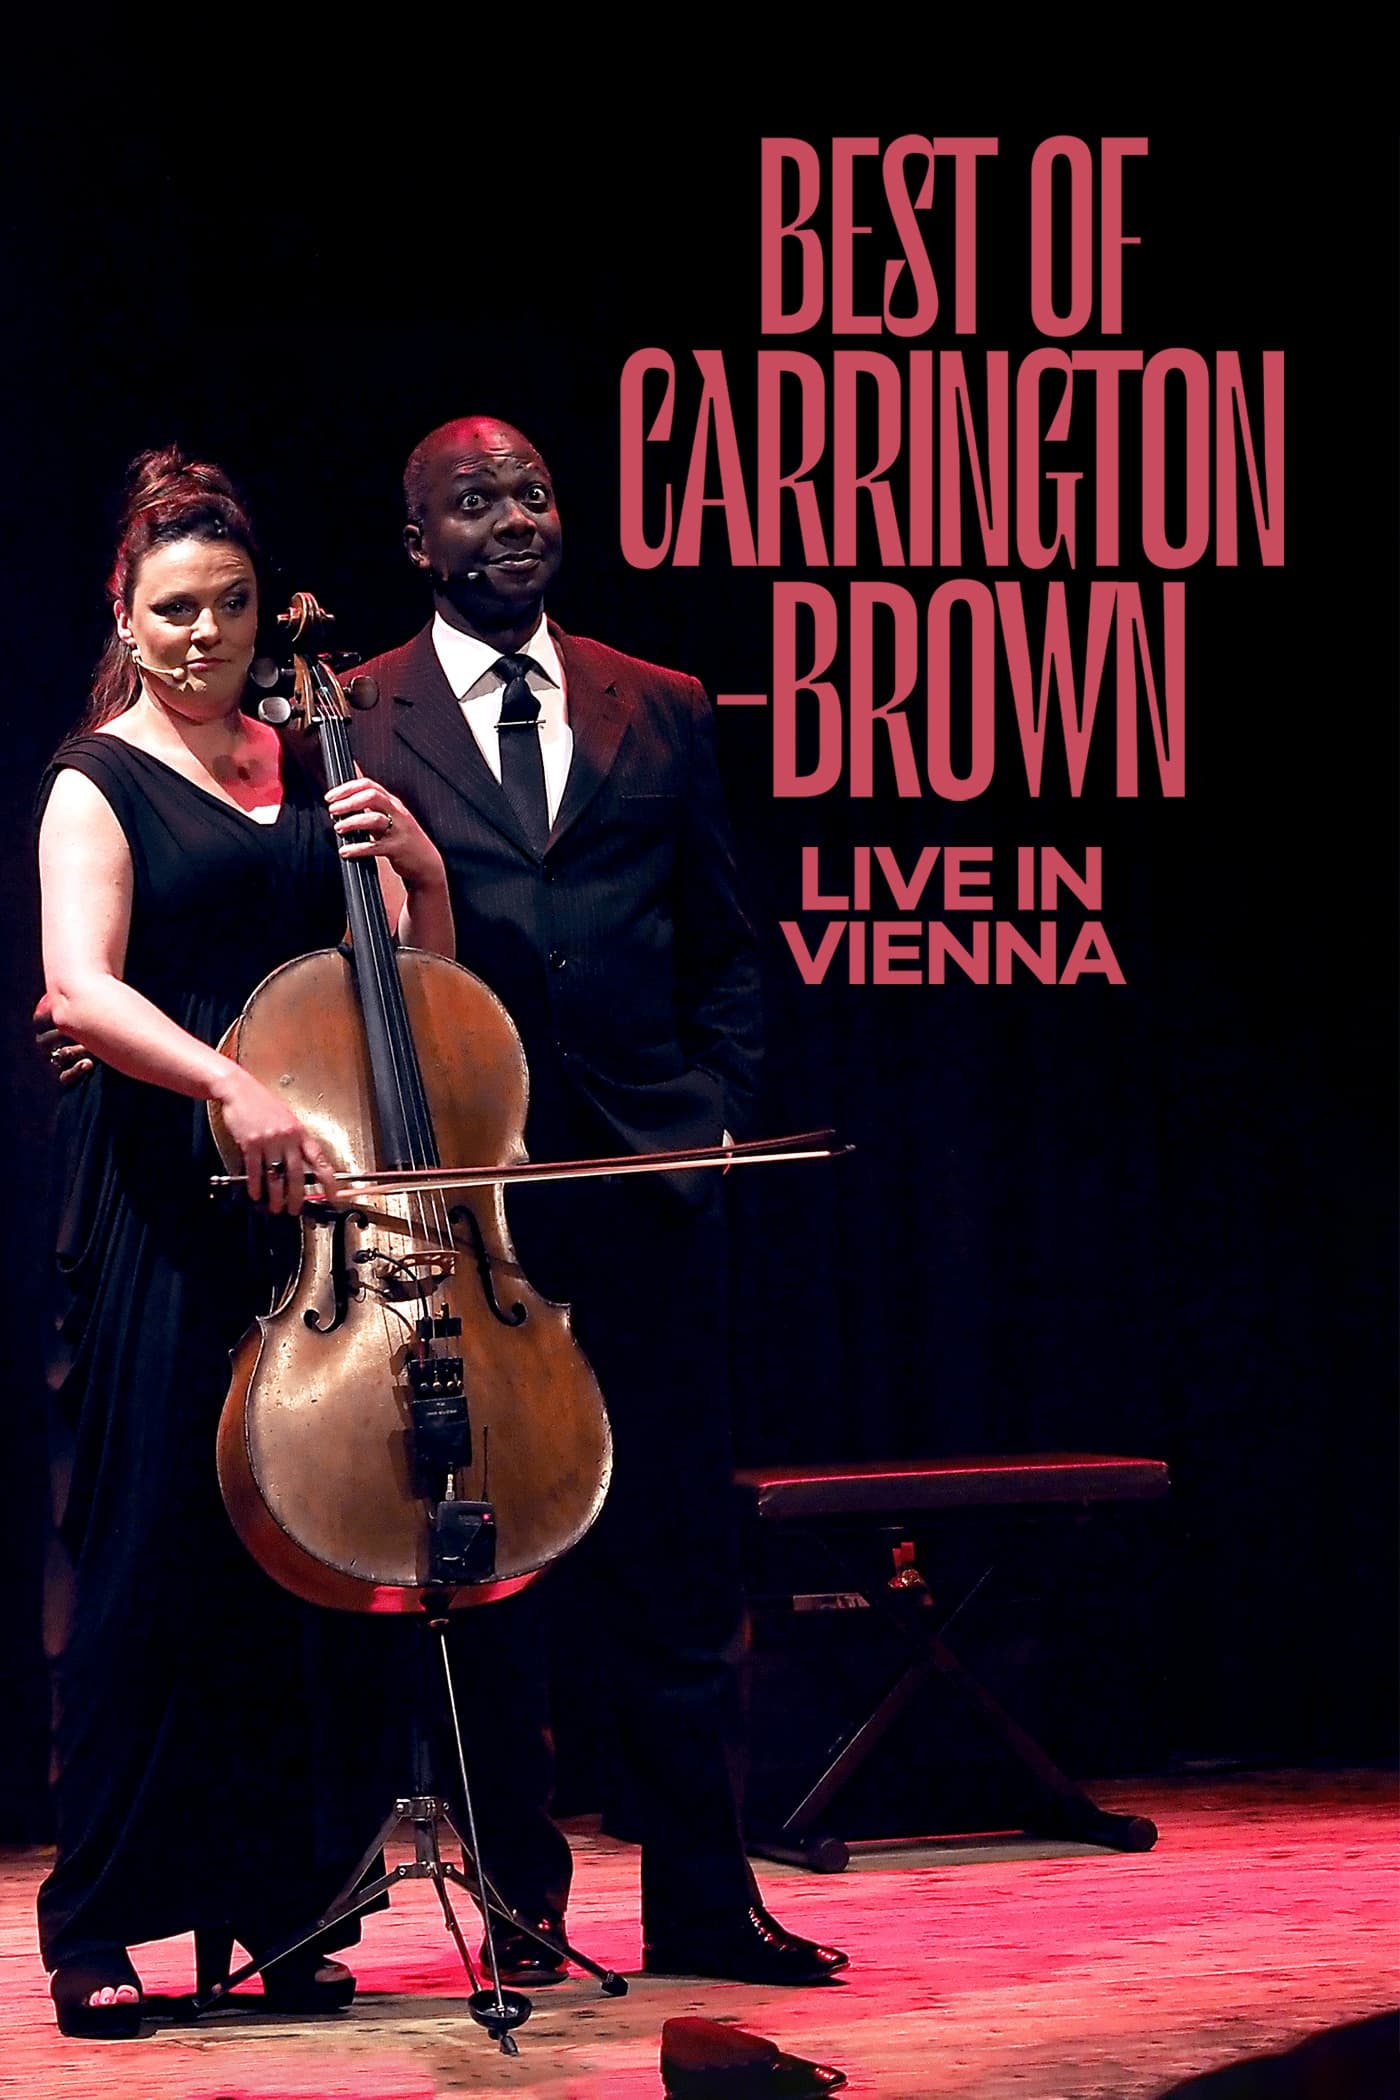 Best of Carrington-Brown live in Vienna